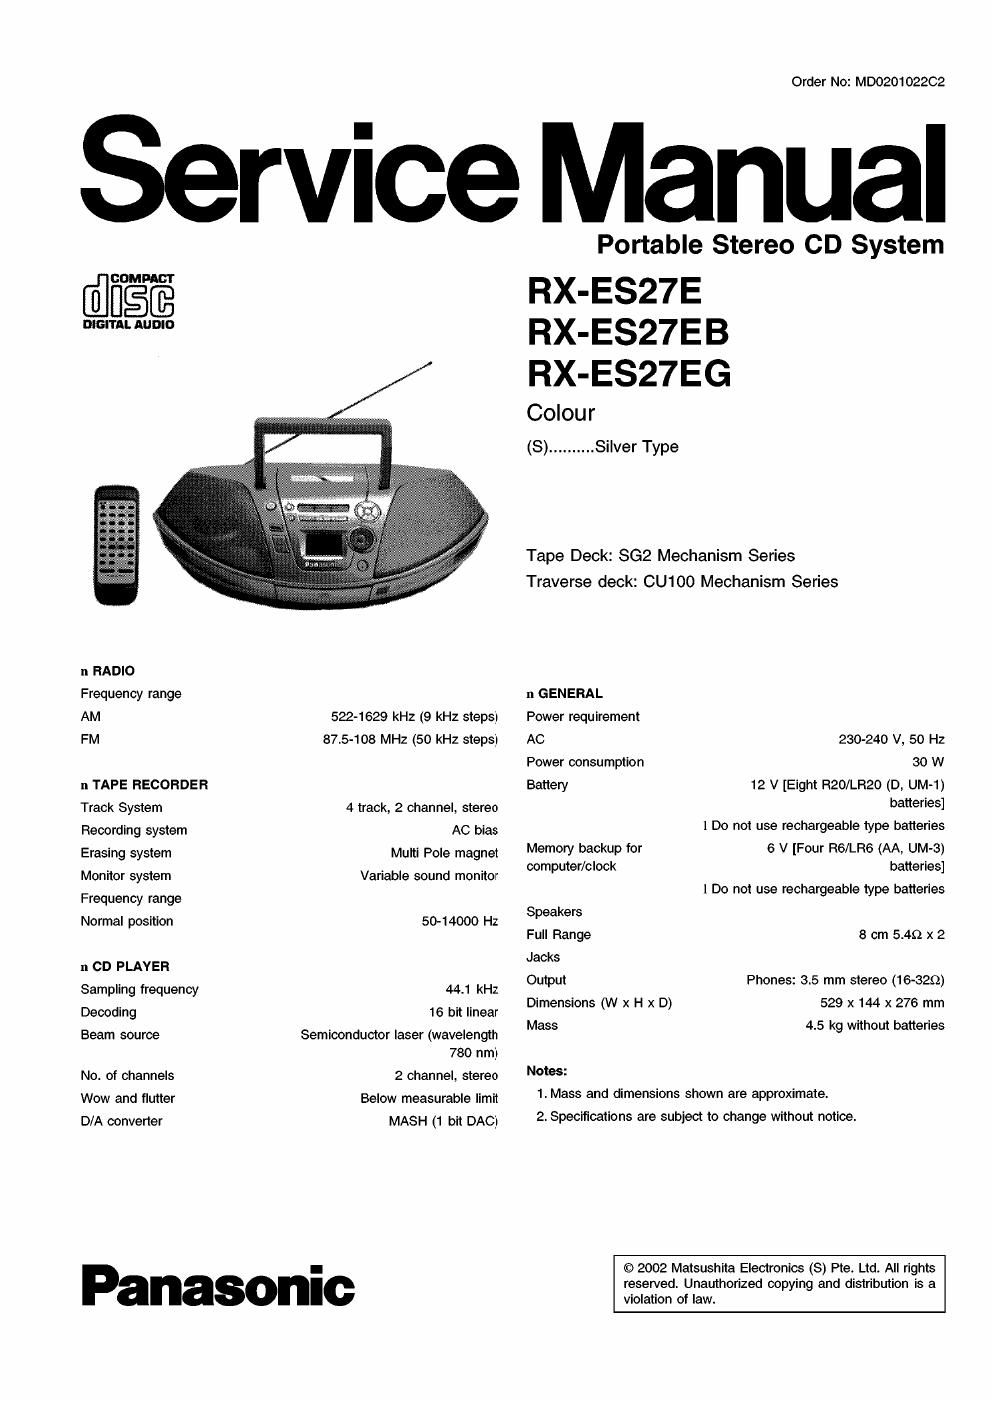 panasonic rx es 27 eb service manual